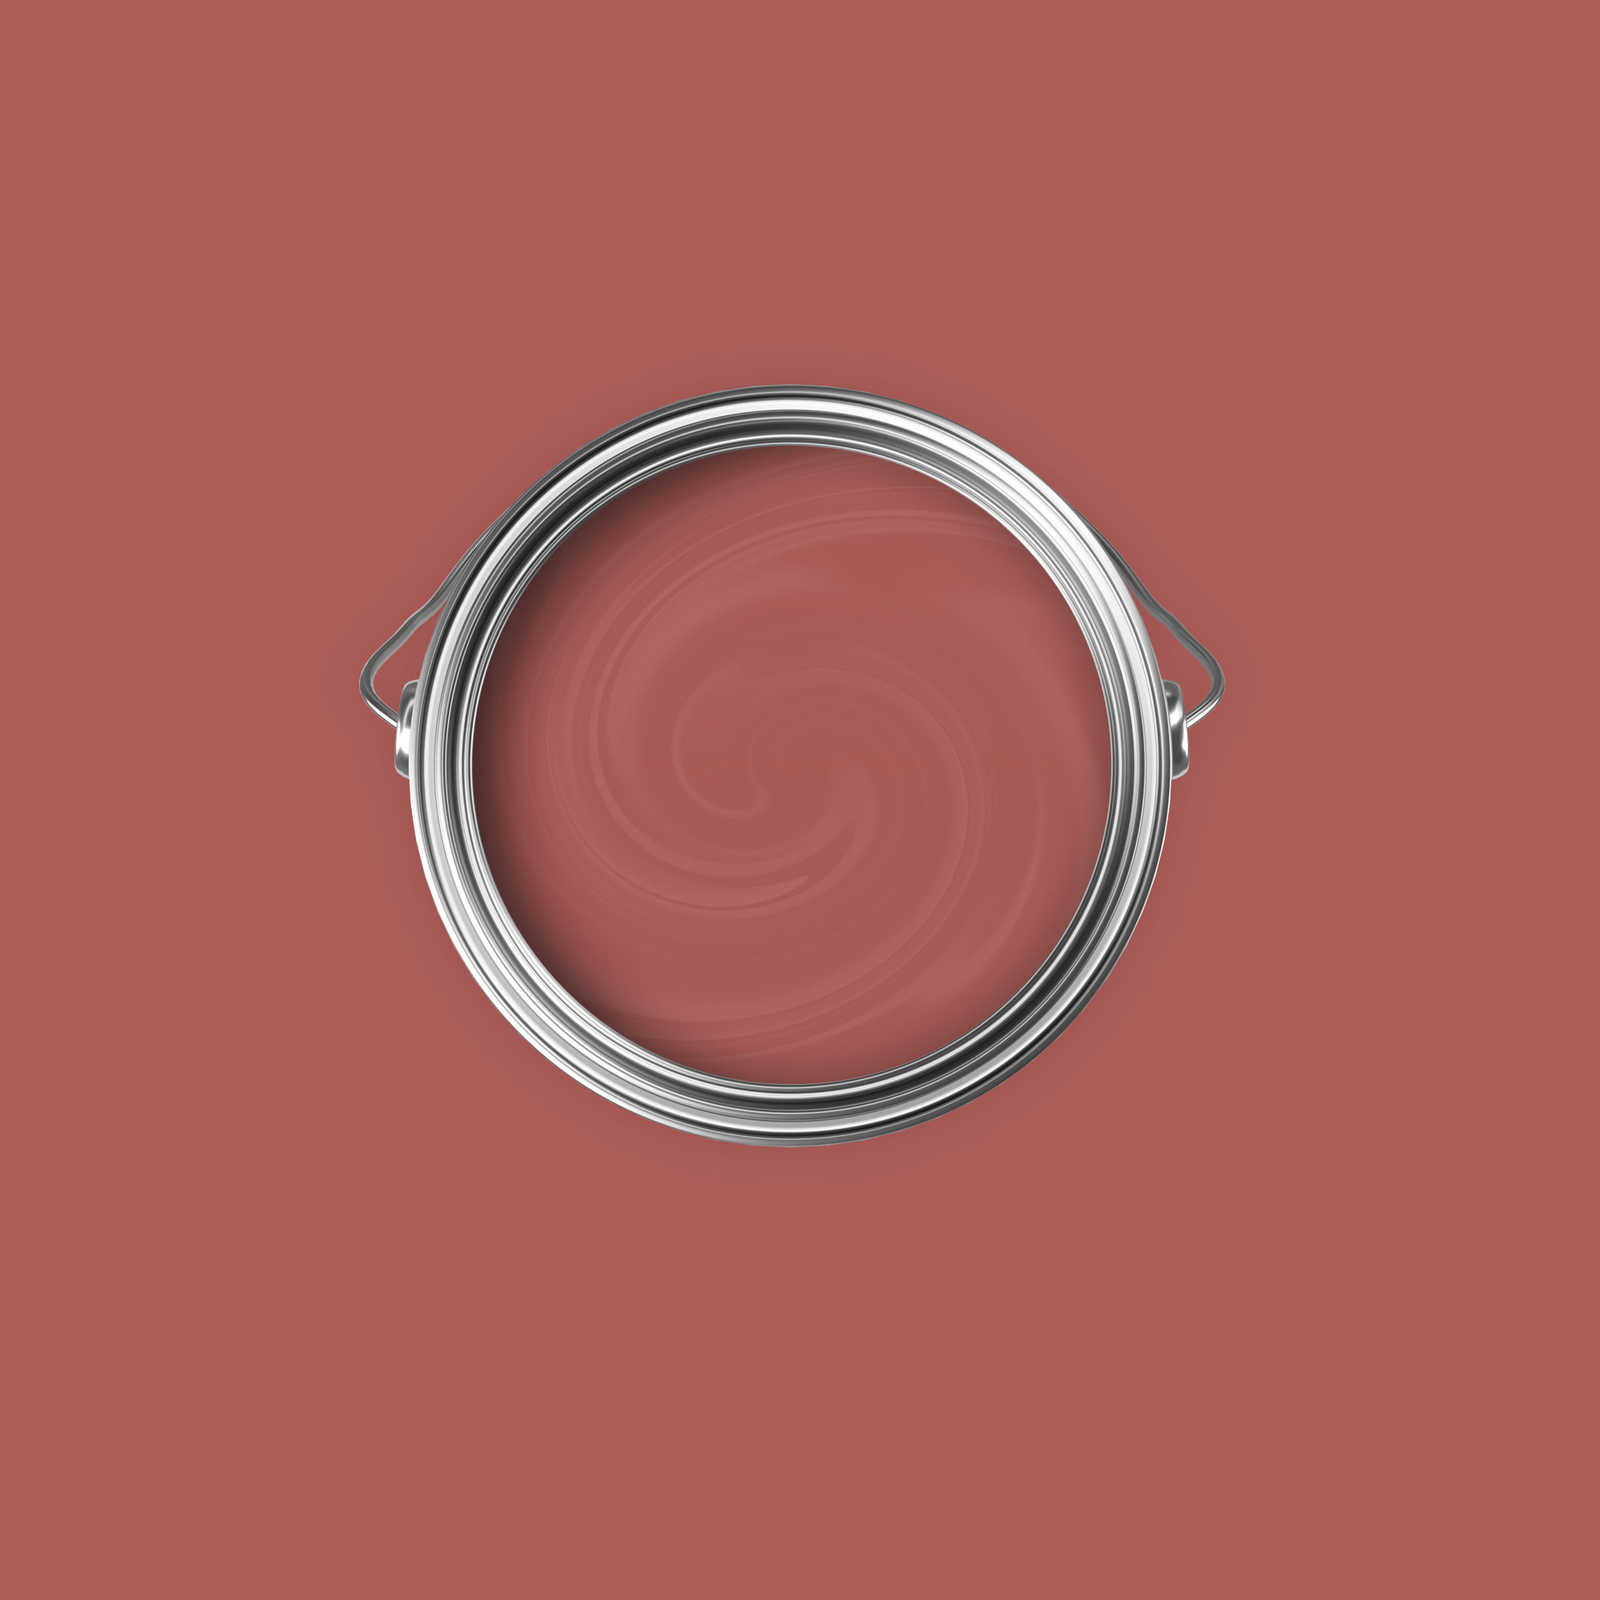             Pintura mural Premium armoniosa rosa oscuro »Luxury Lipstick« NW1005 – 2,5 litro
        